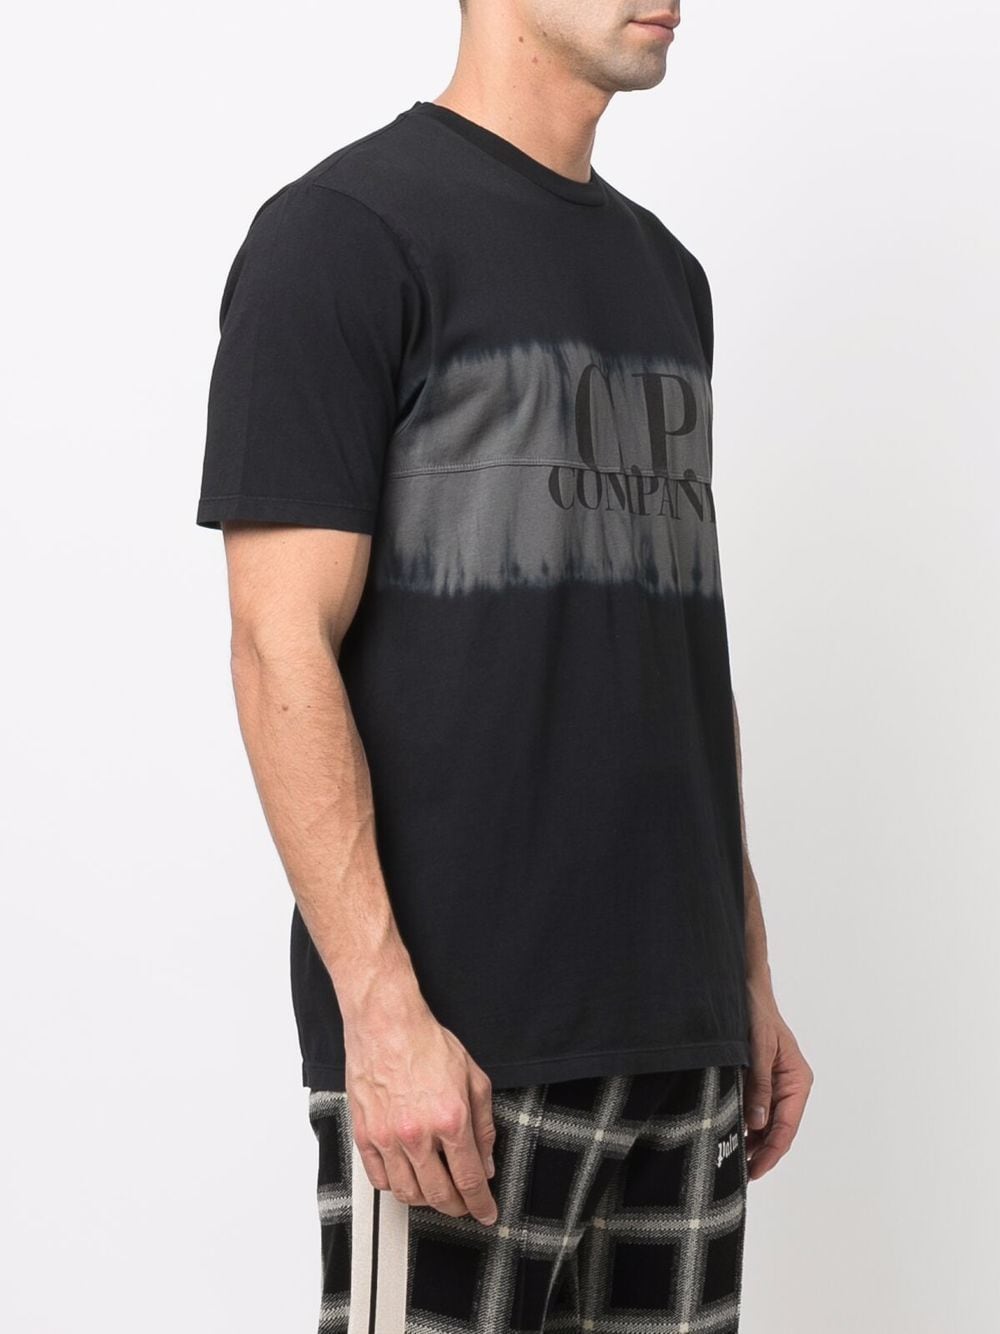 C.P COMPANY Logo Print T-Shirt Black - MAISONDEFASHION.COM